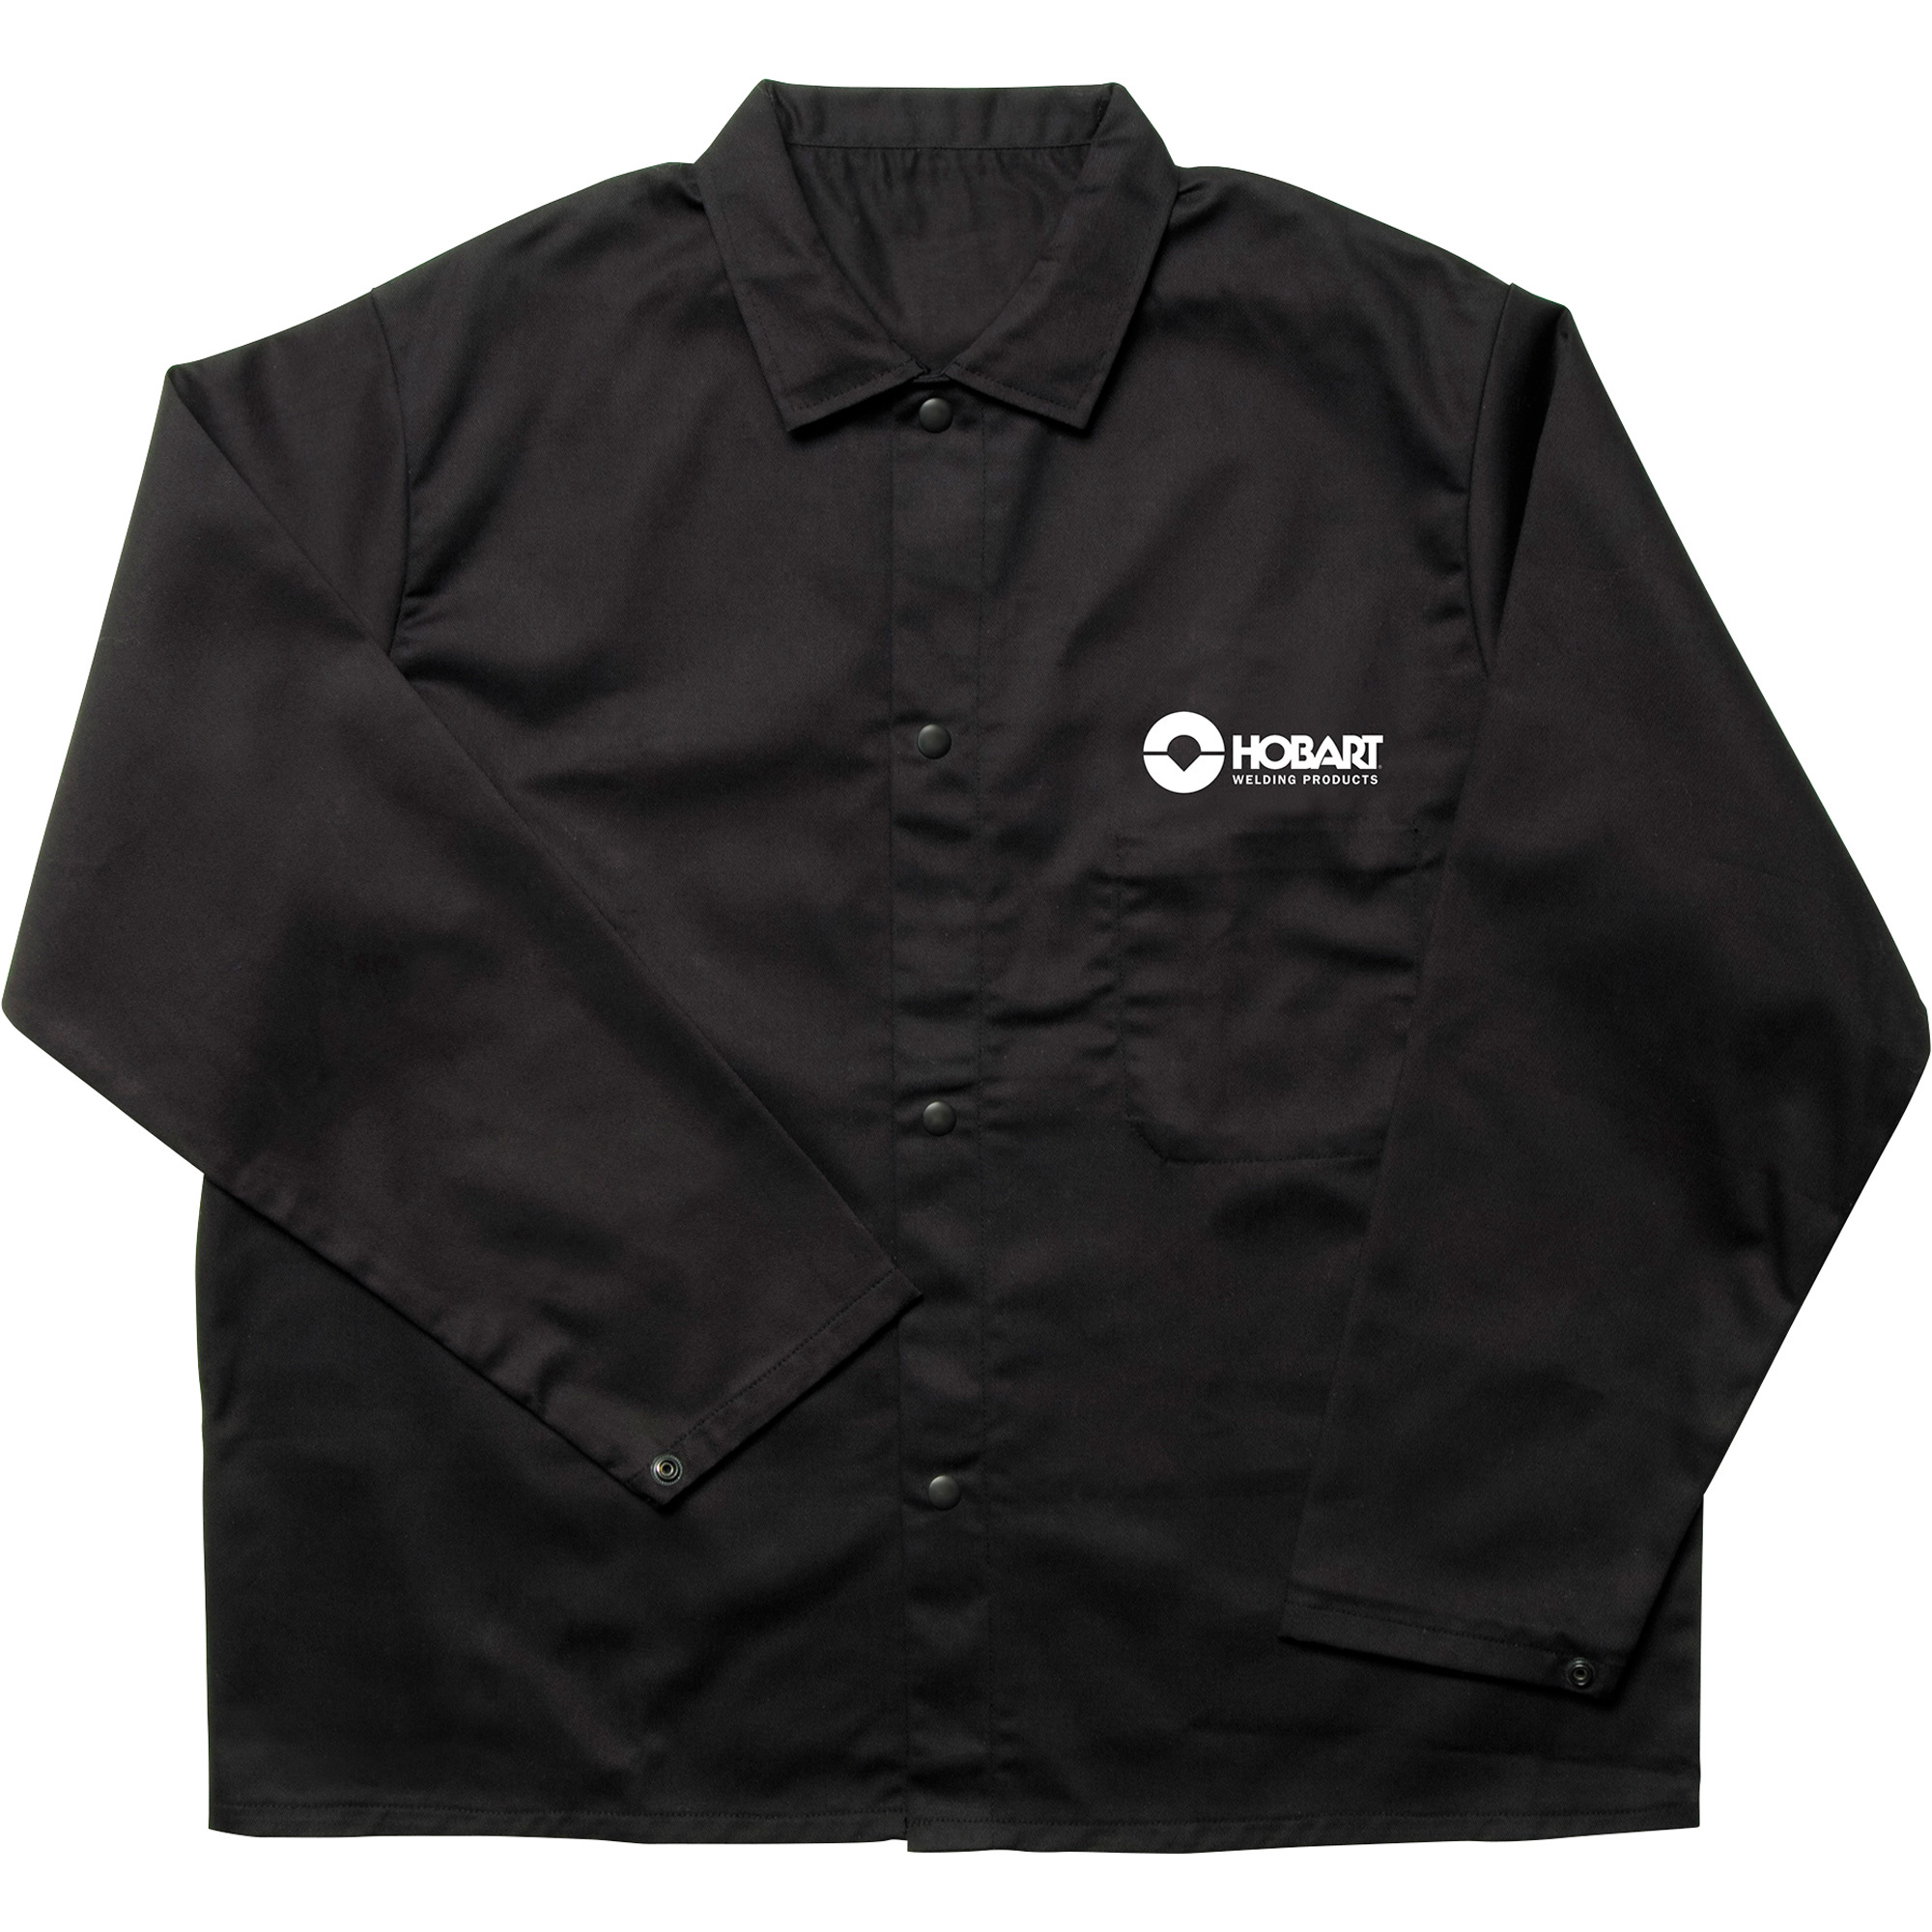 Hobart Welding Jacket â Flame-Retardant Cotton, Black, X-Large, Model 770569